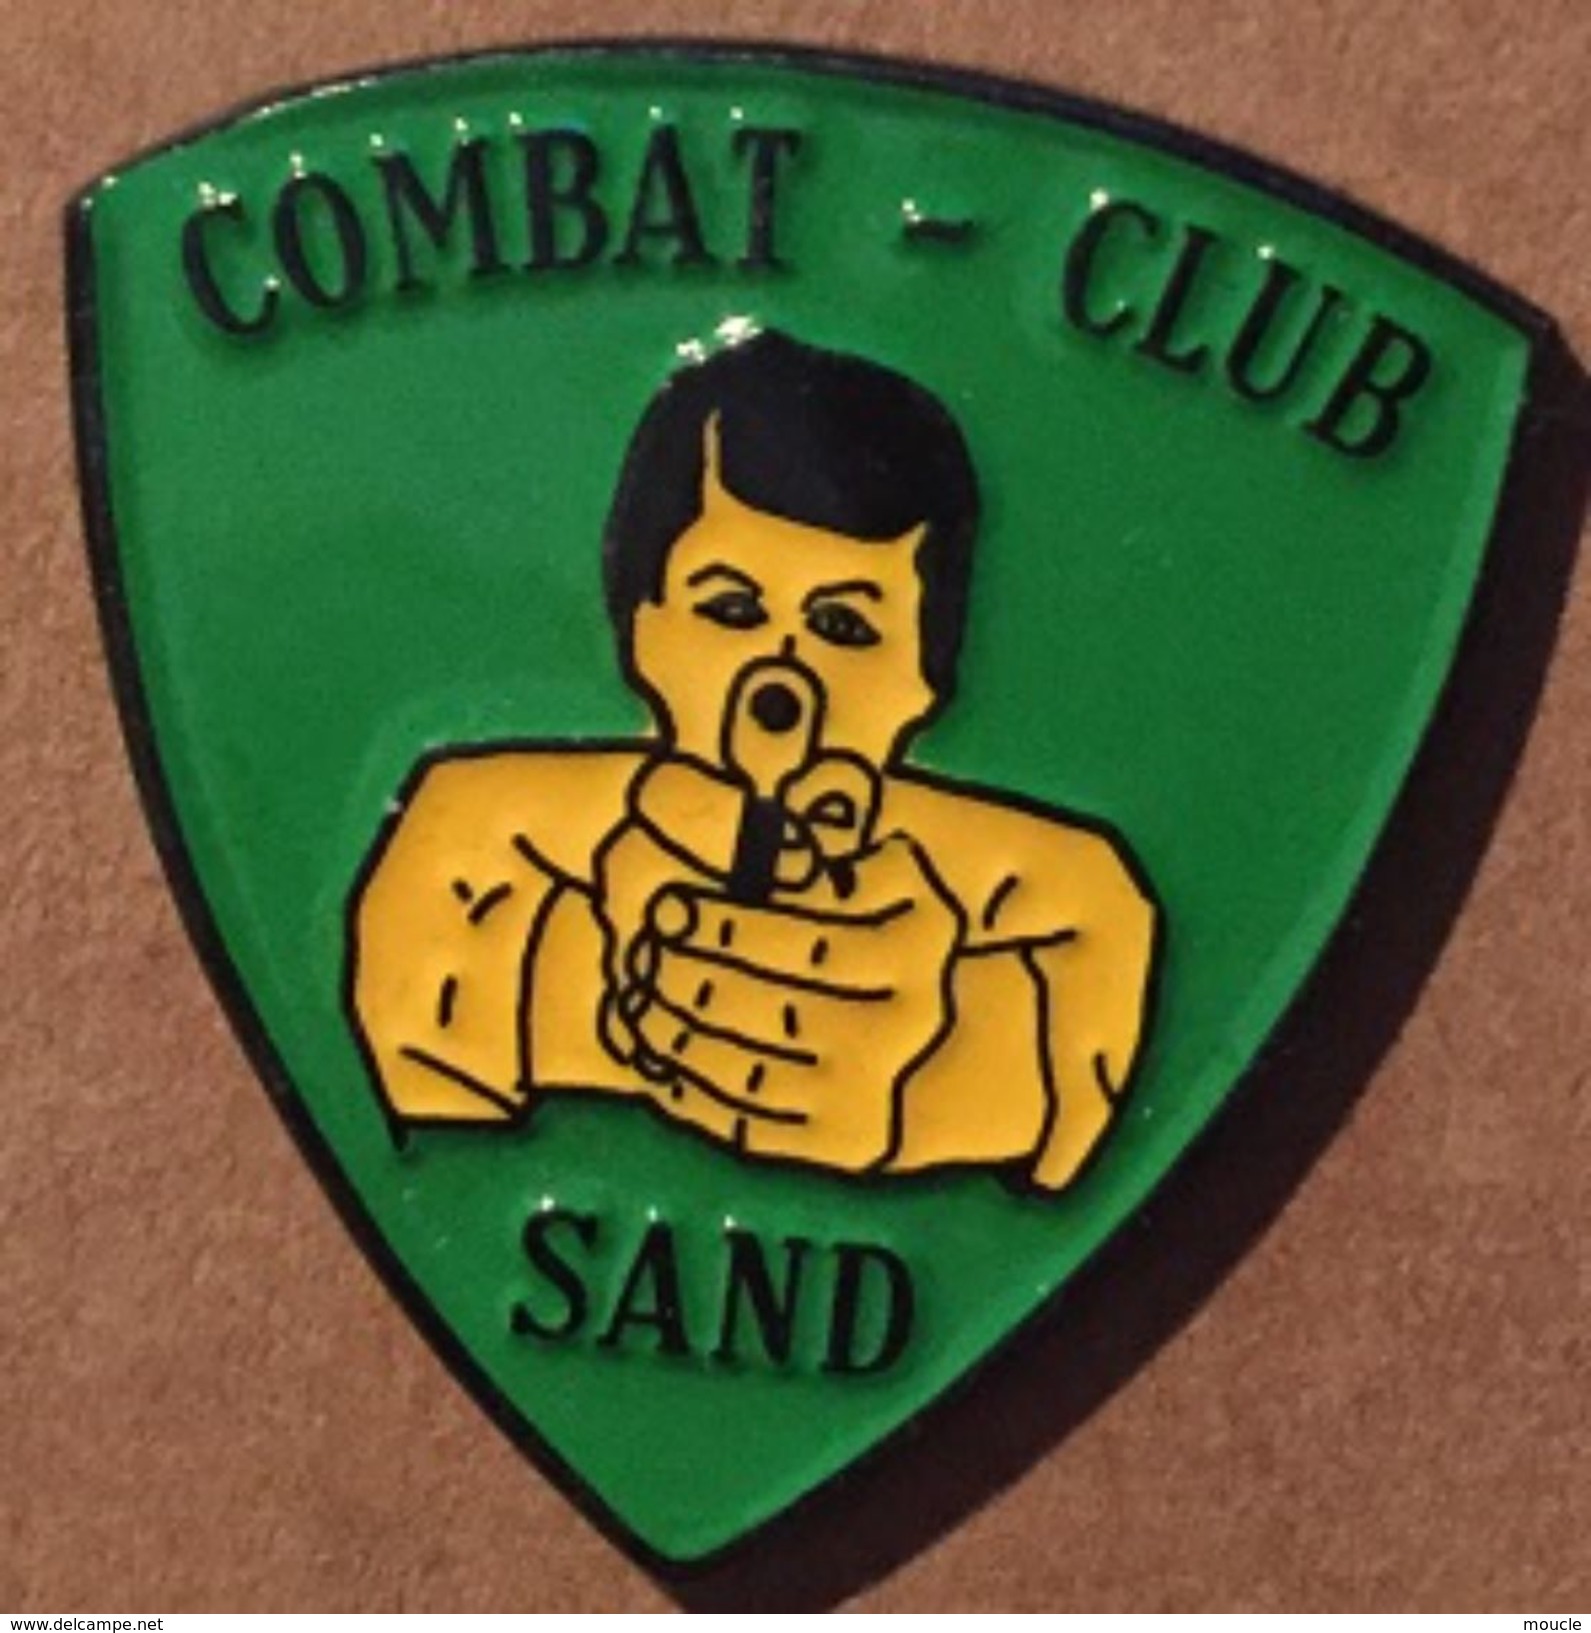 COMBAT - CLUB - SAND - ARME - GUN - PISTOLET -            (19) - Policia